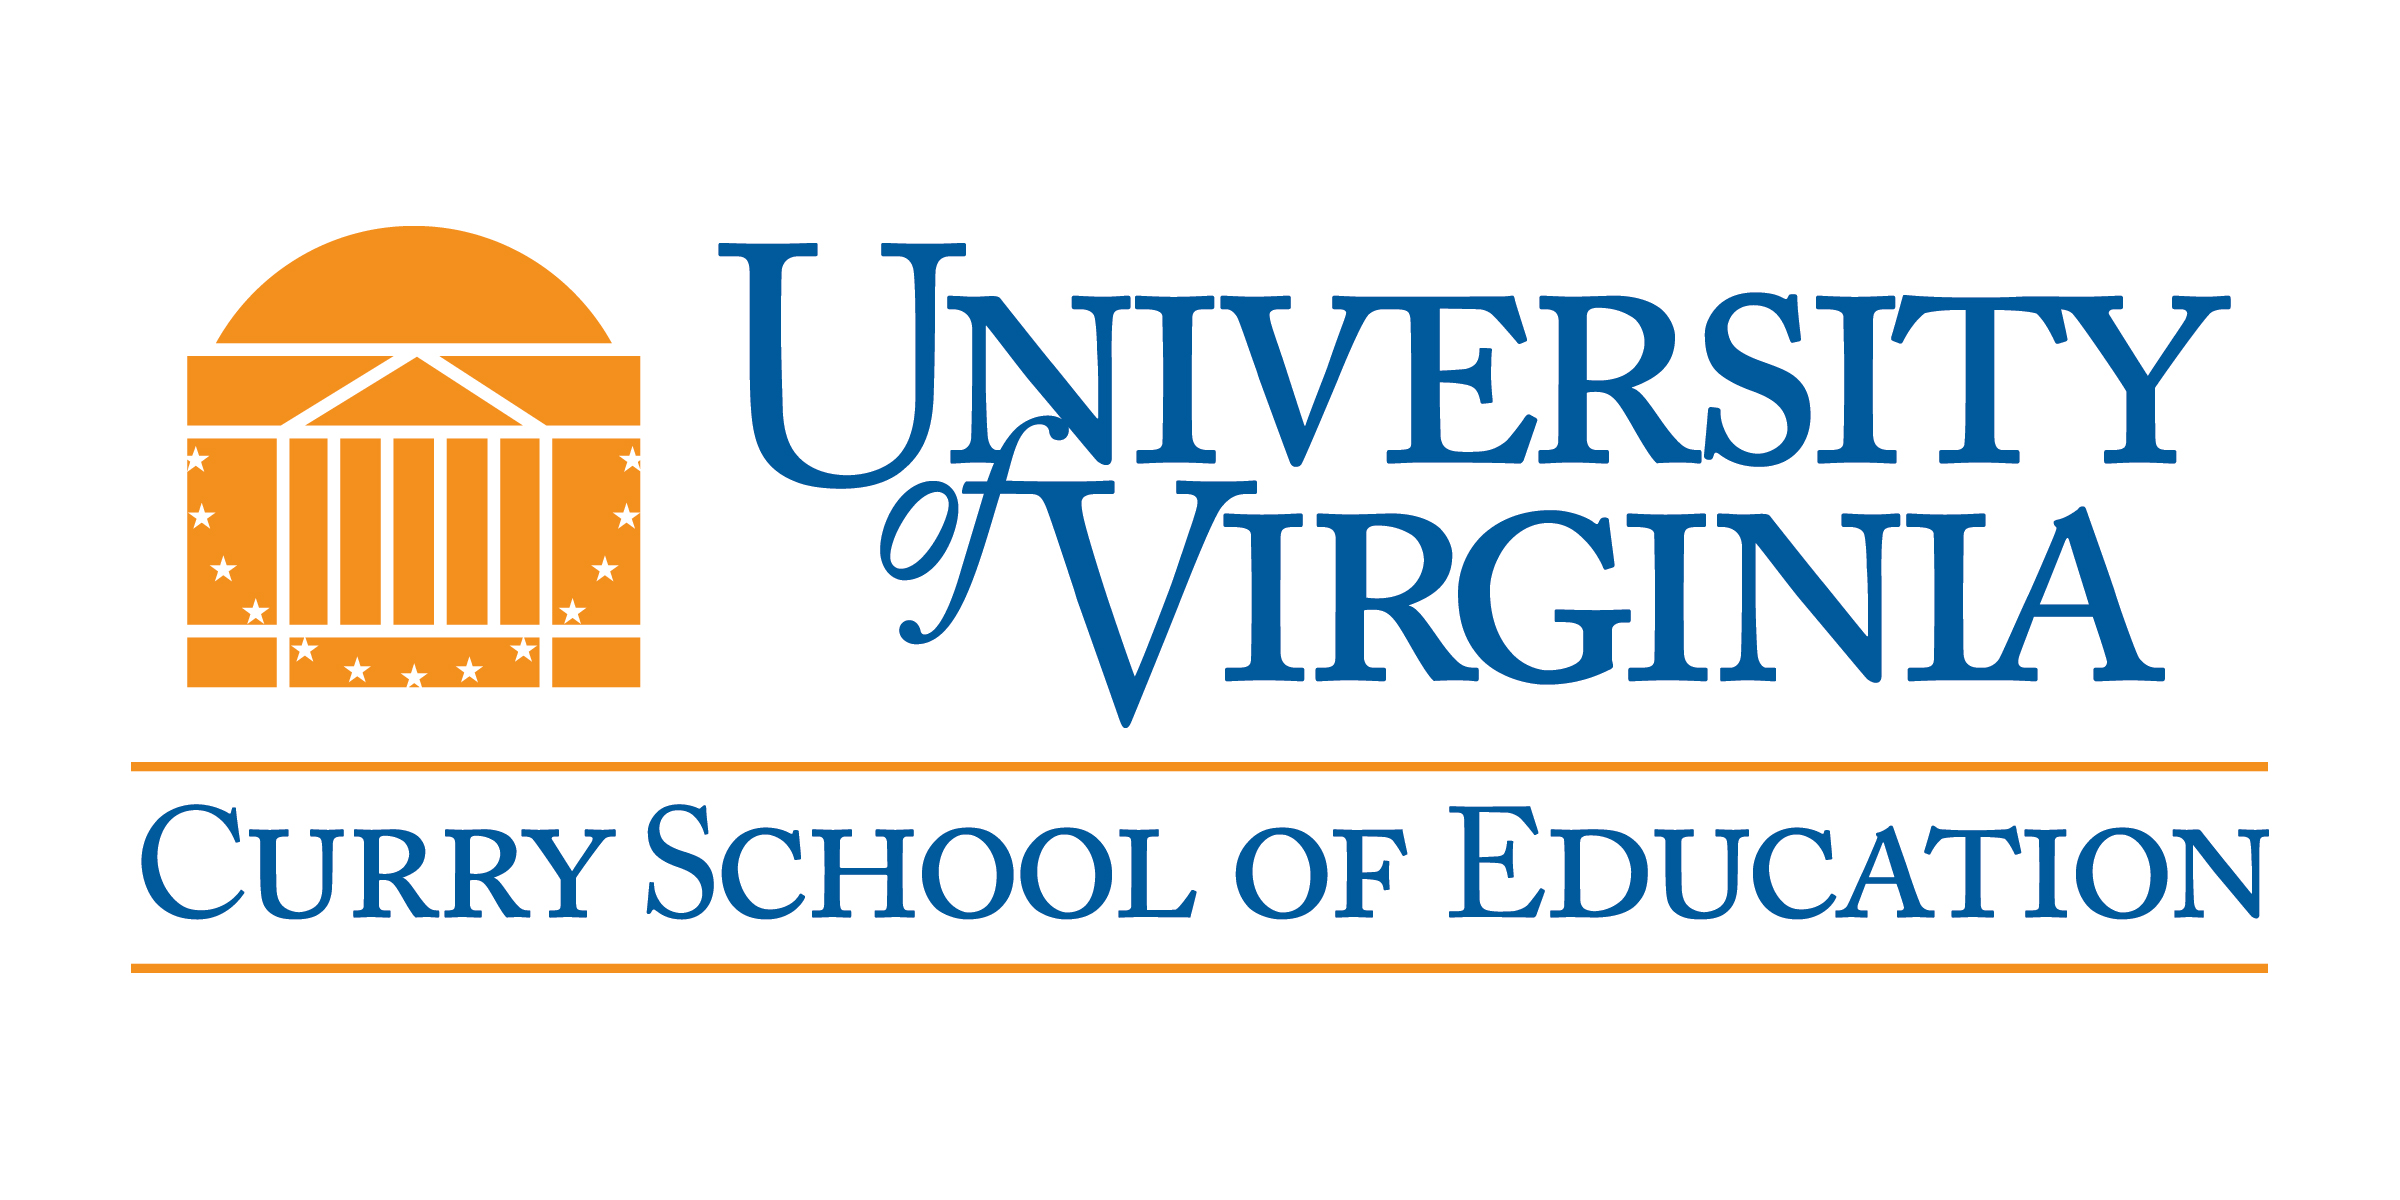 University of Virginia, Curry School of Education logo